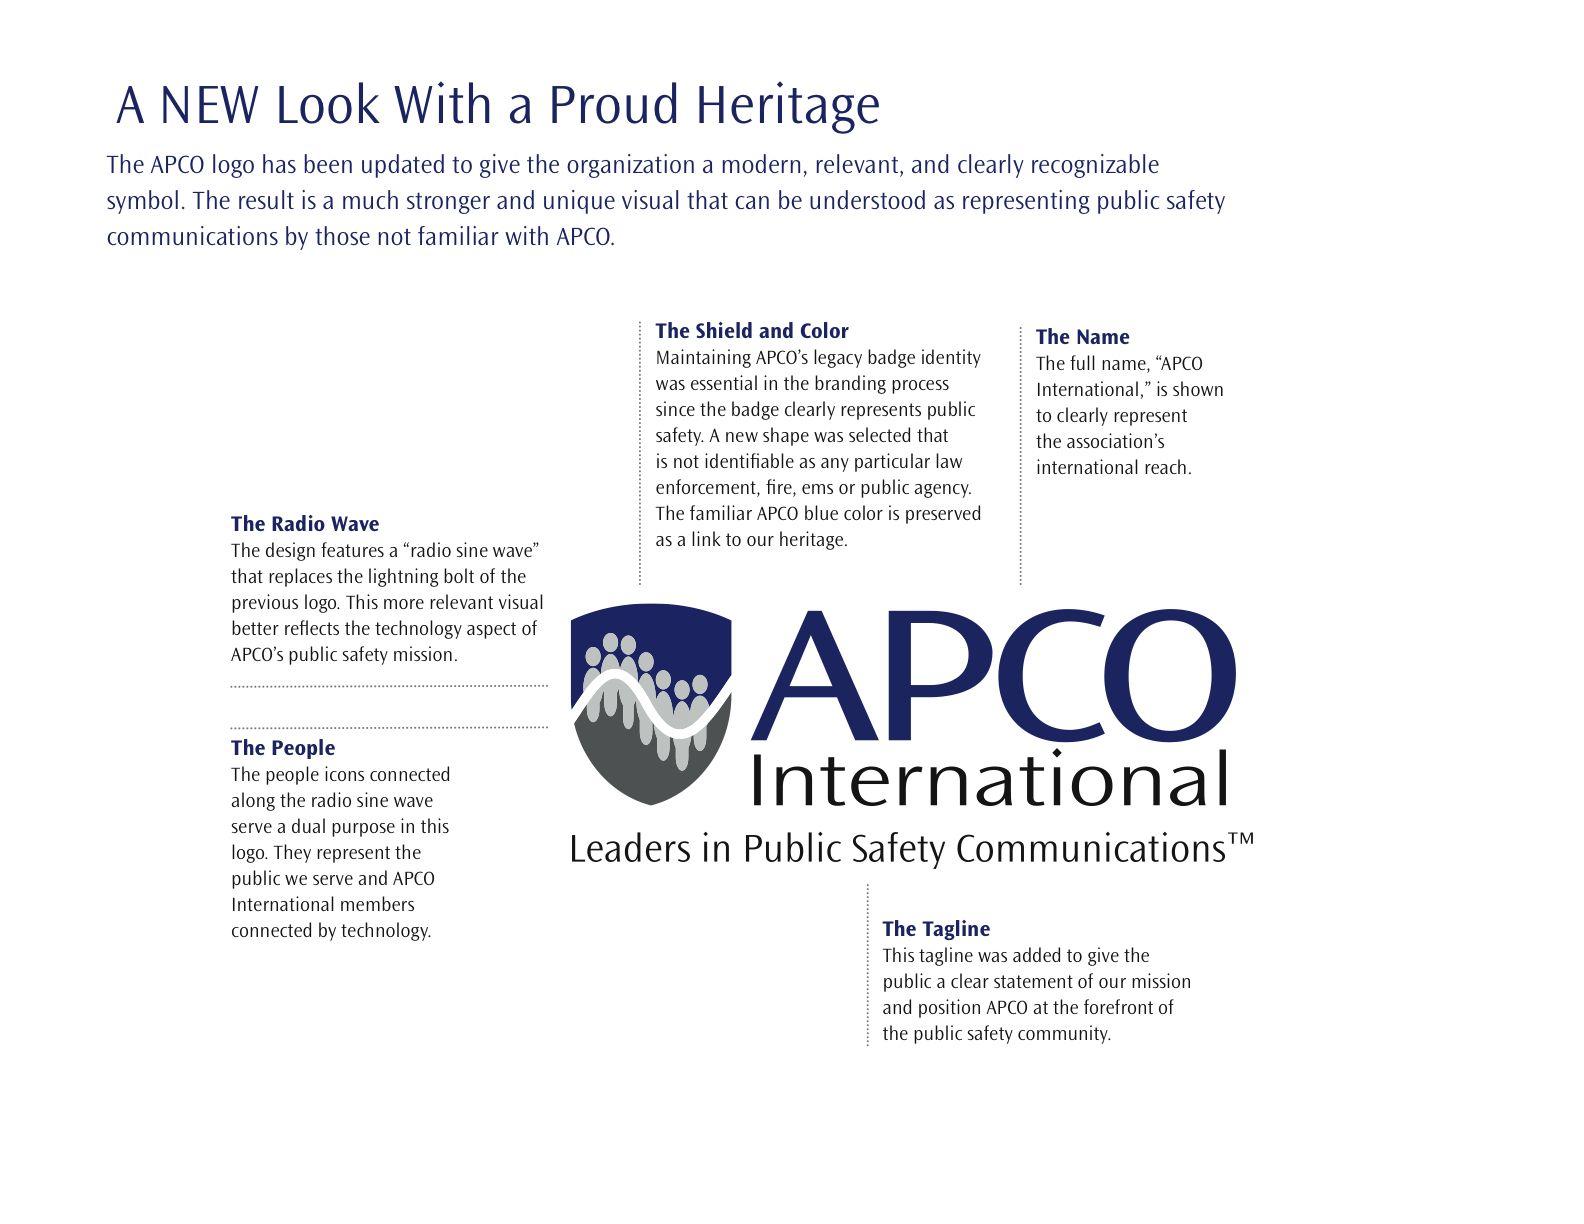 APCO Logo - The Process & History Behind APCO's New Look